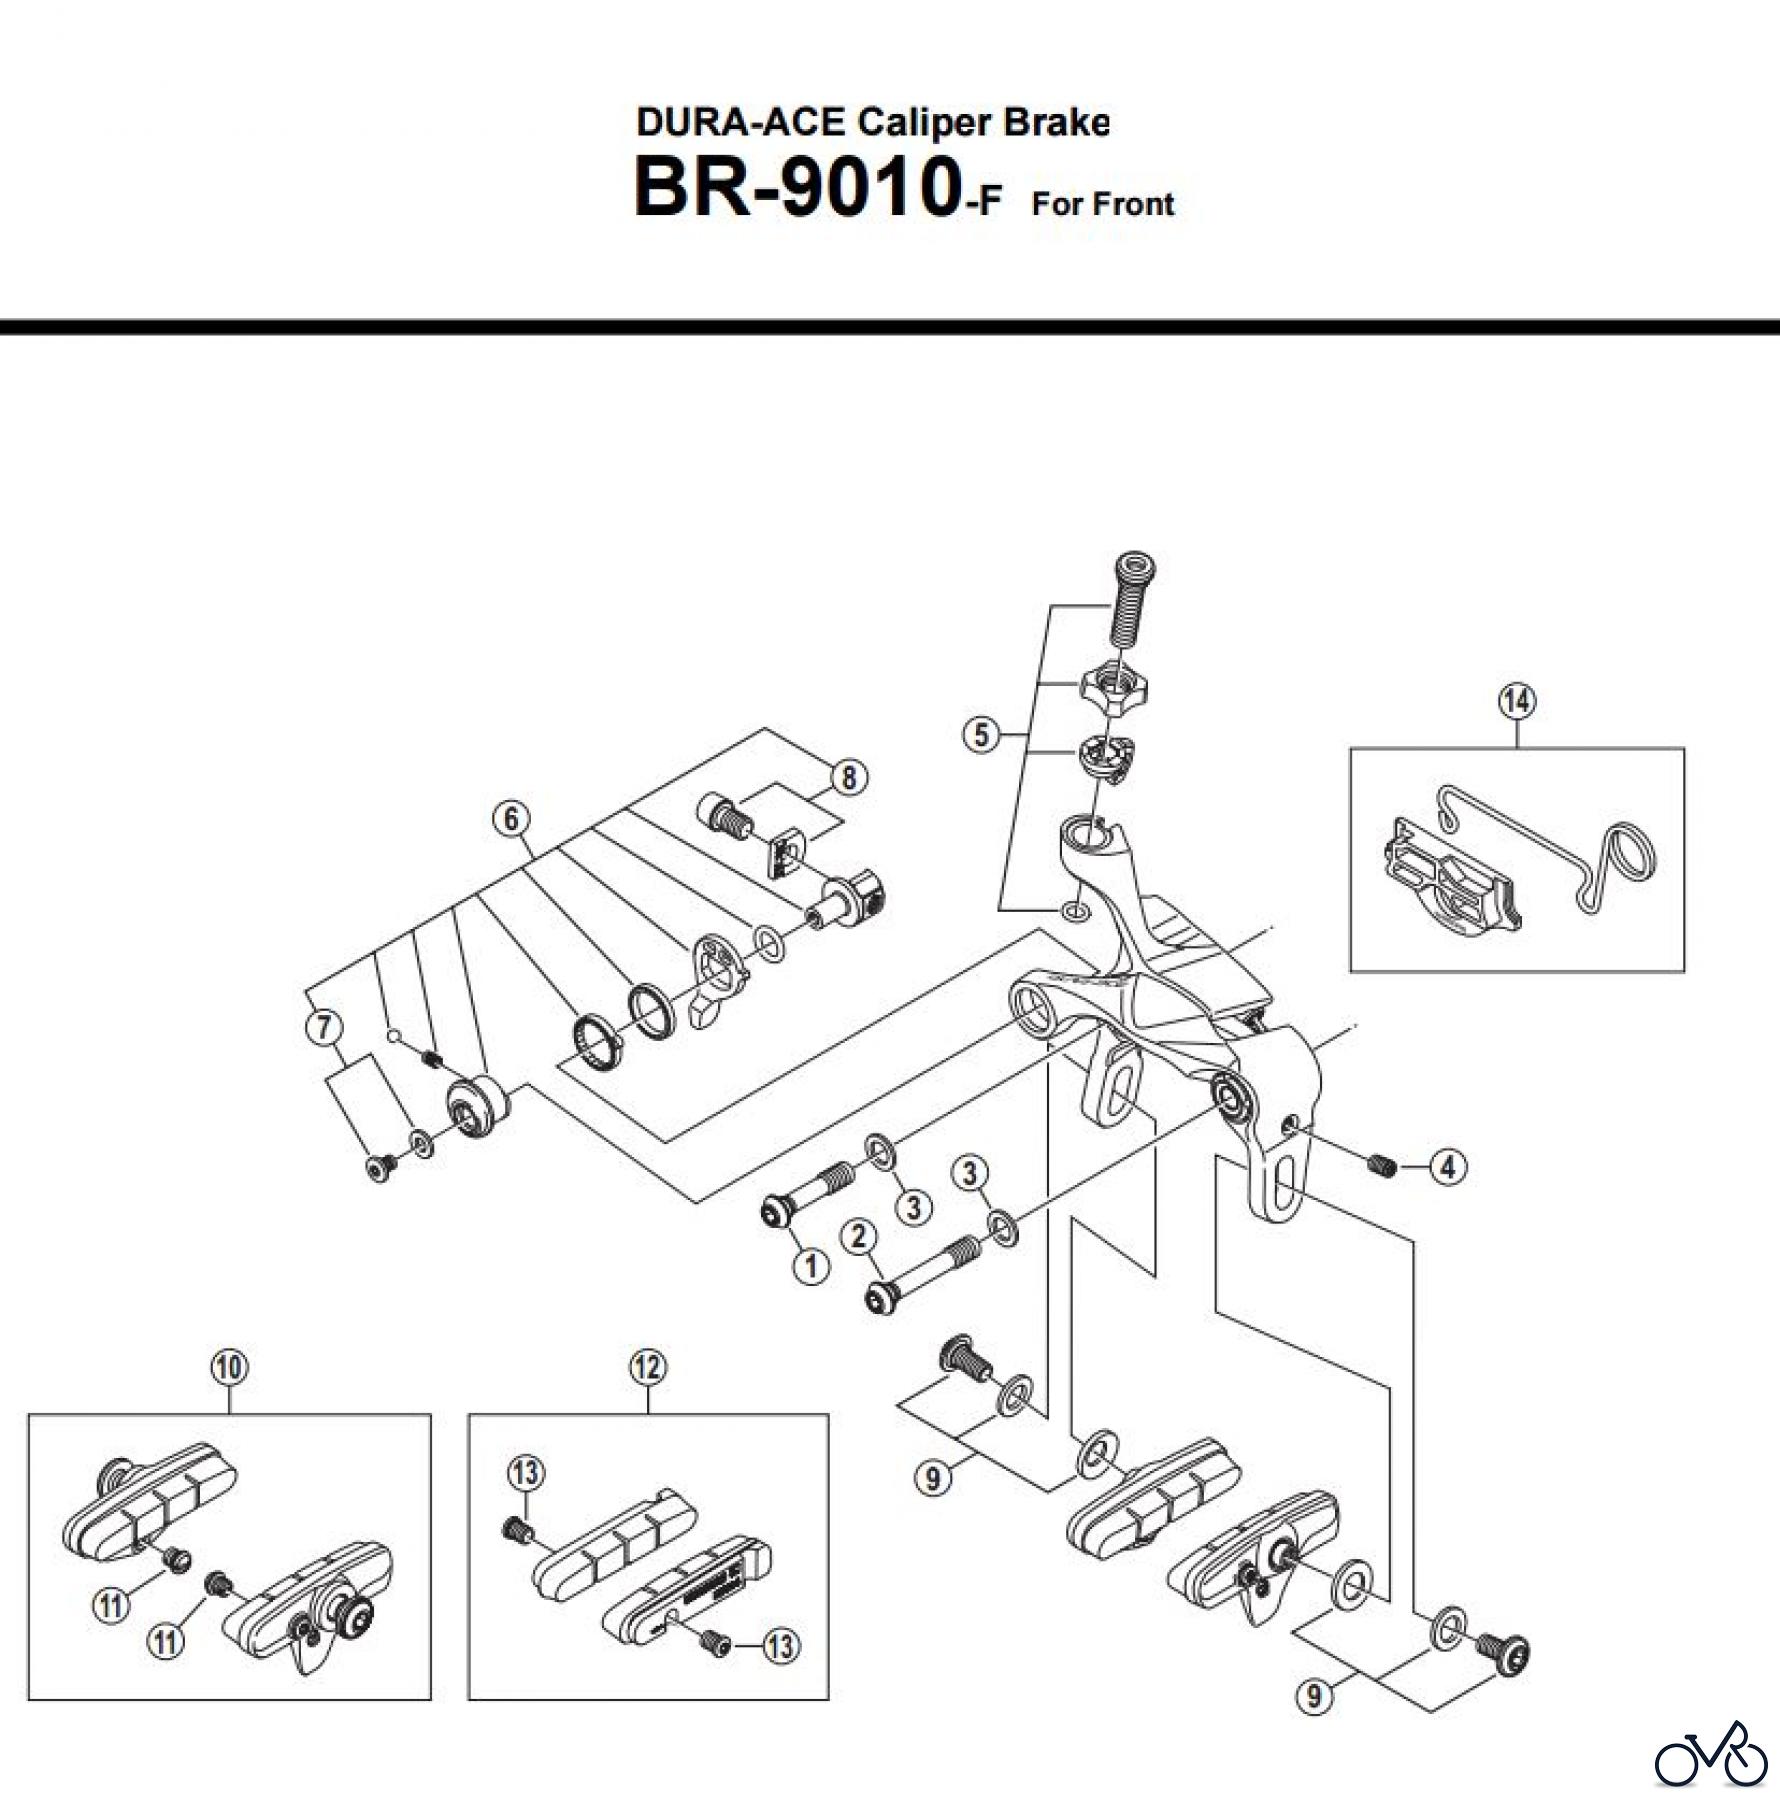  Shimano BR Brake - Bremse BR-9010-F -3461 DURA-ACE Caliper Brake For Front